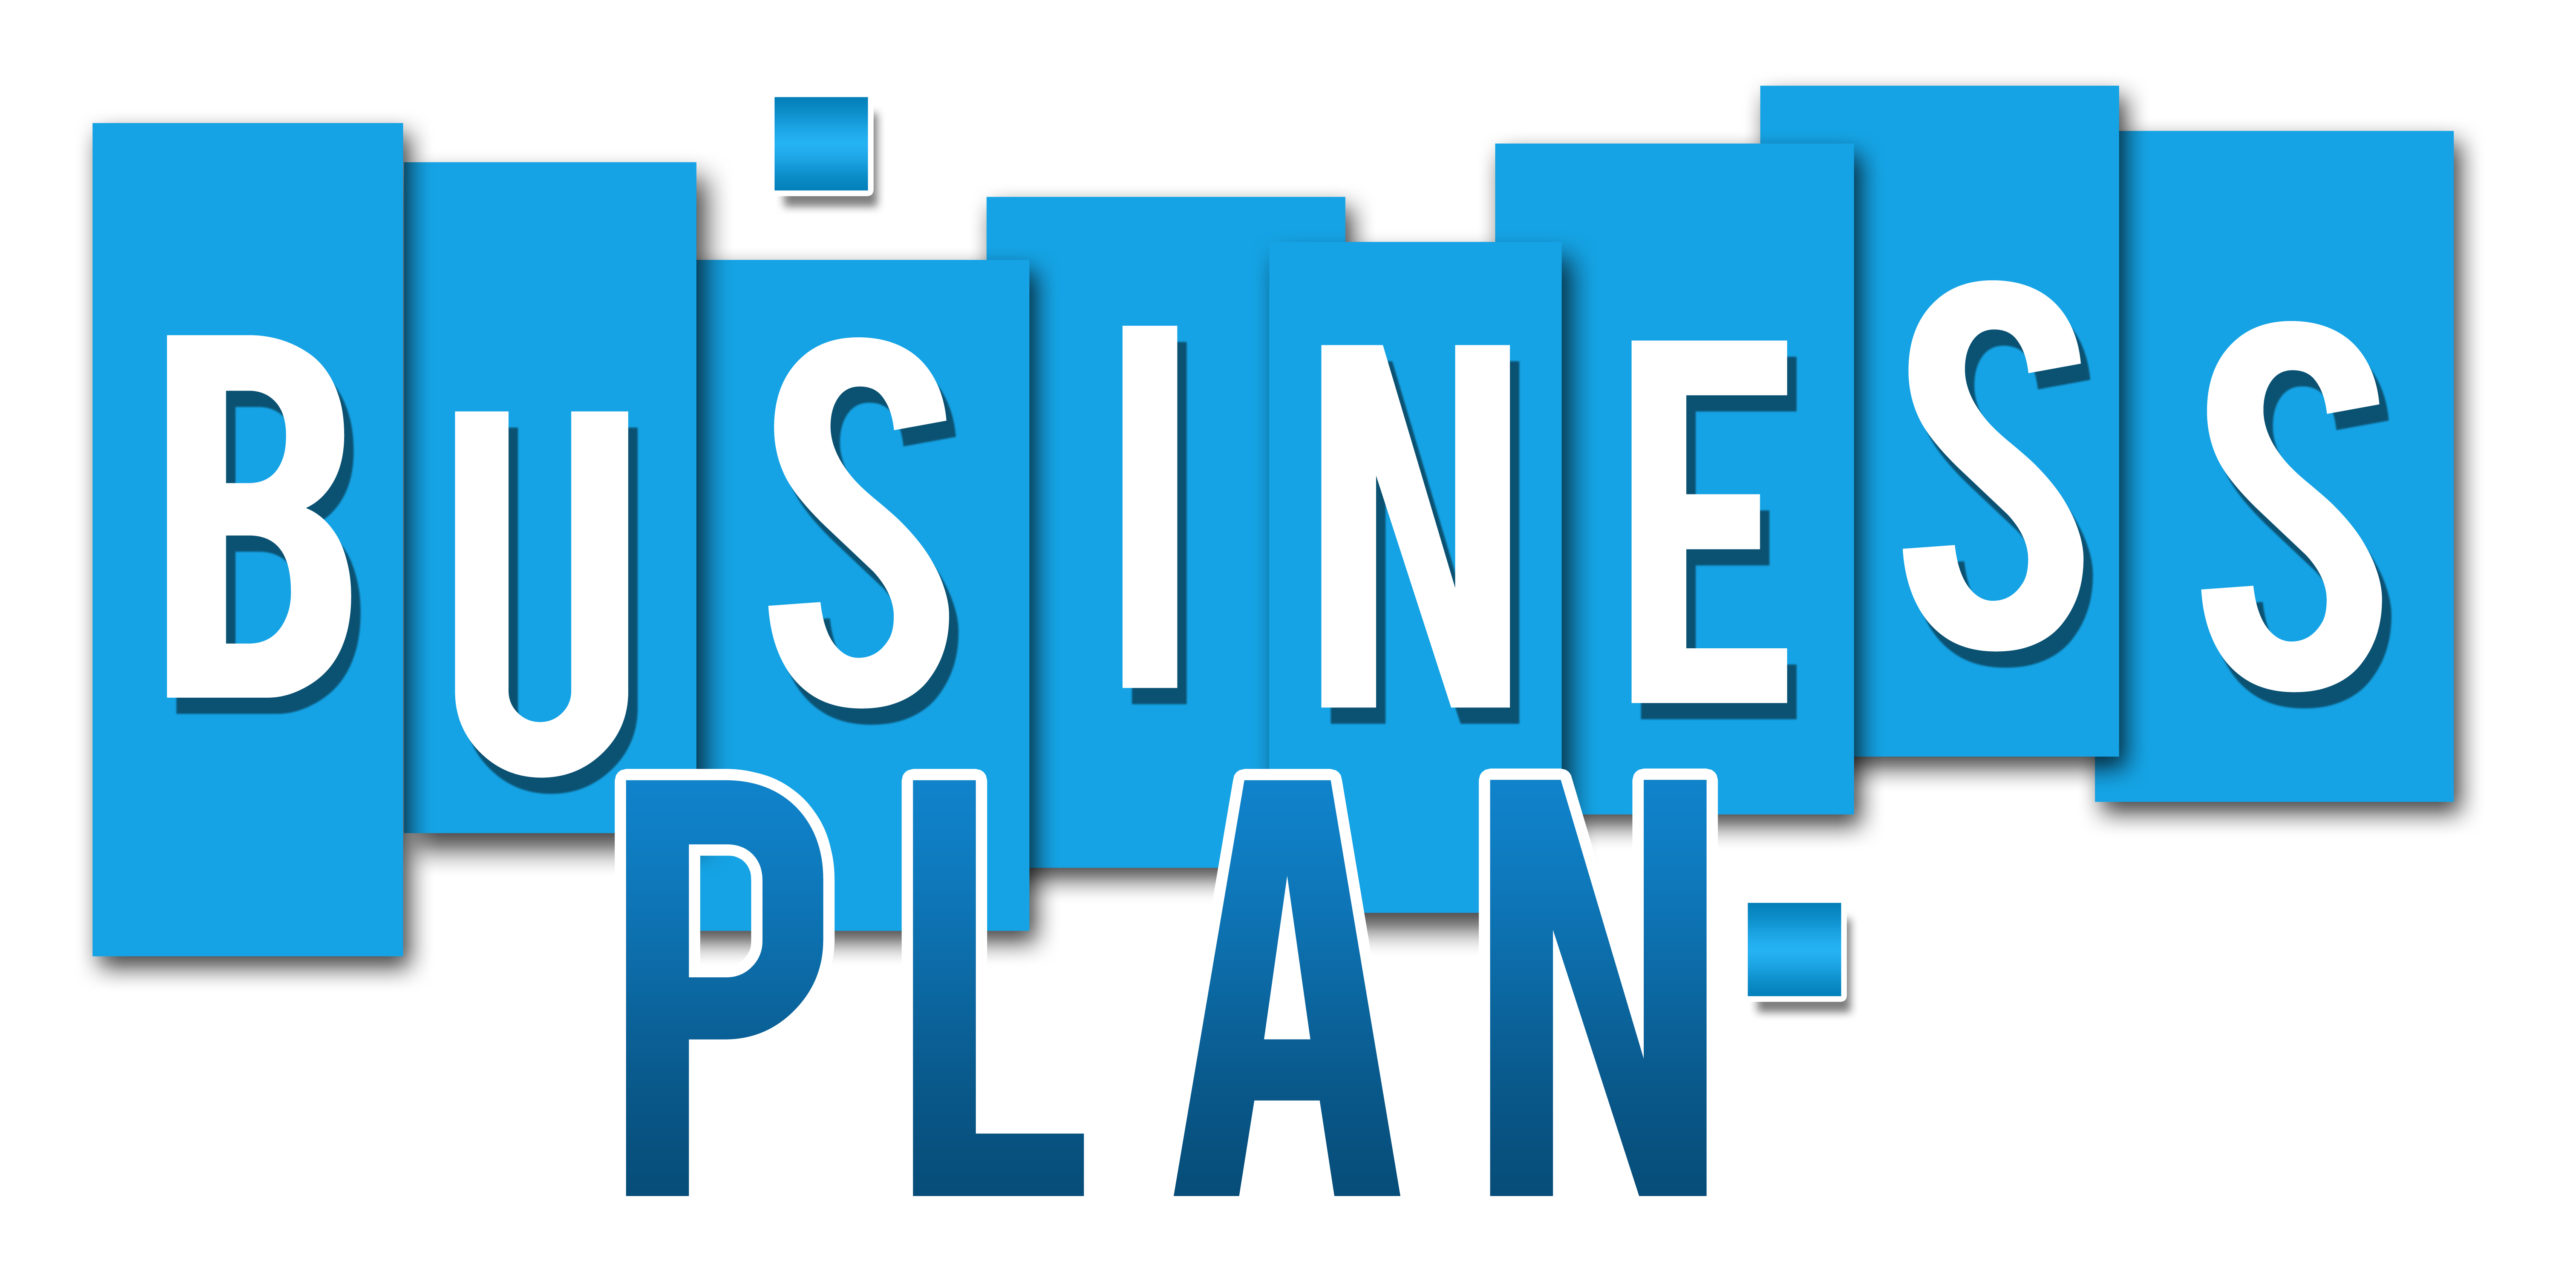 Business plan wording on blue stripes